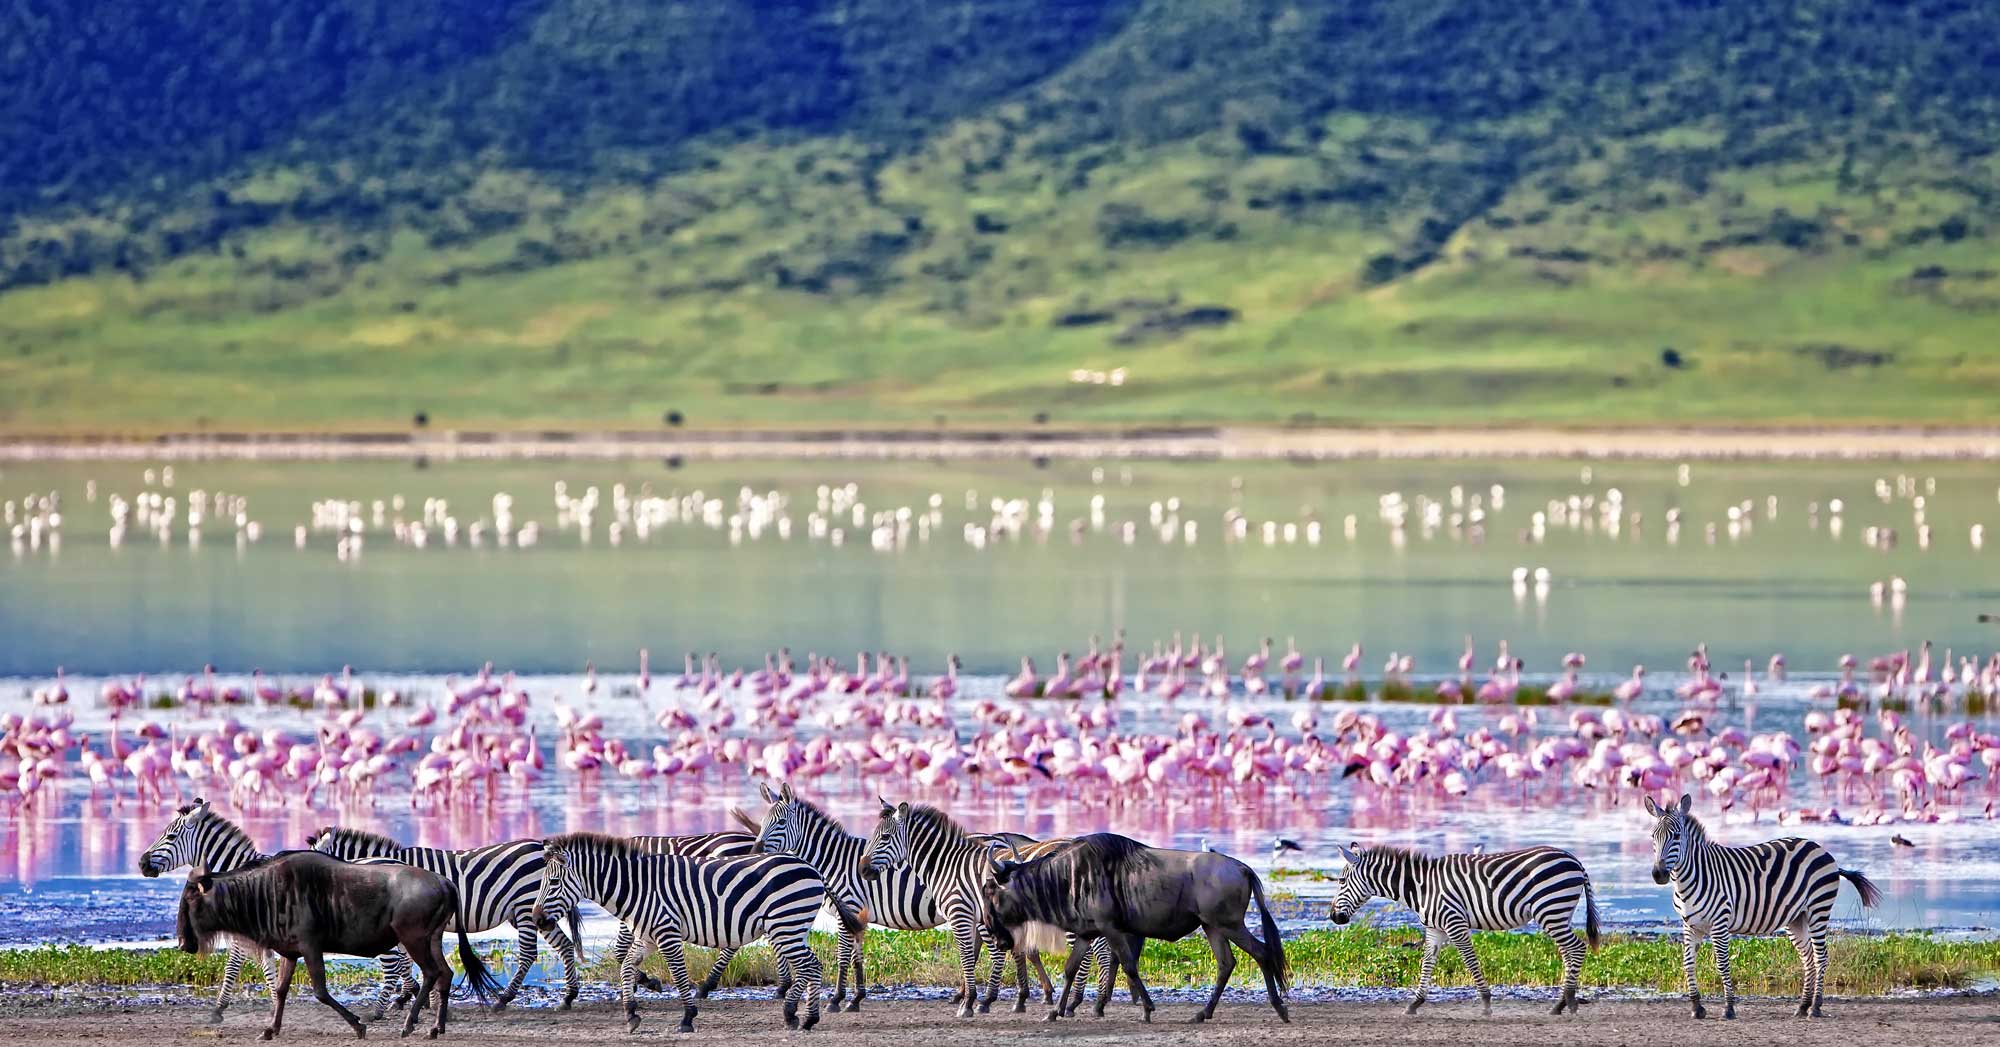 Ngorongoro Animals